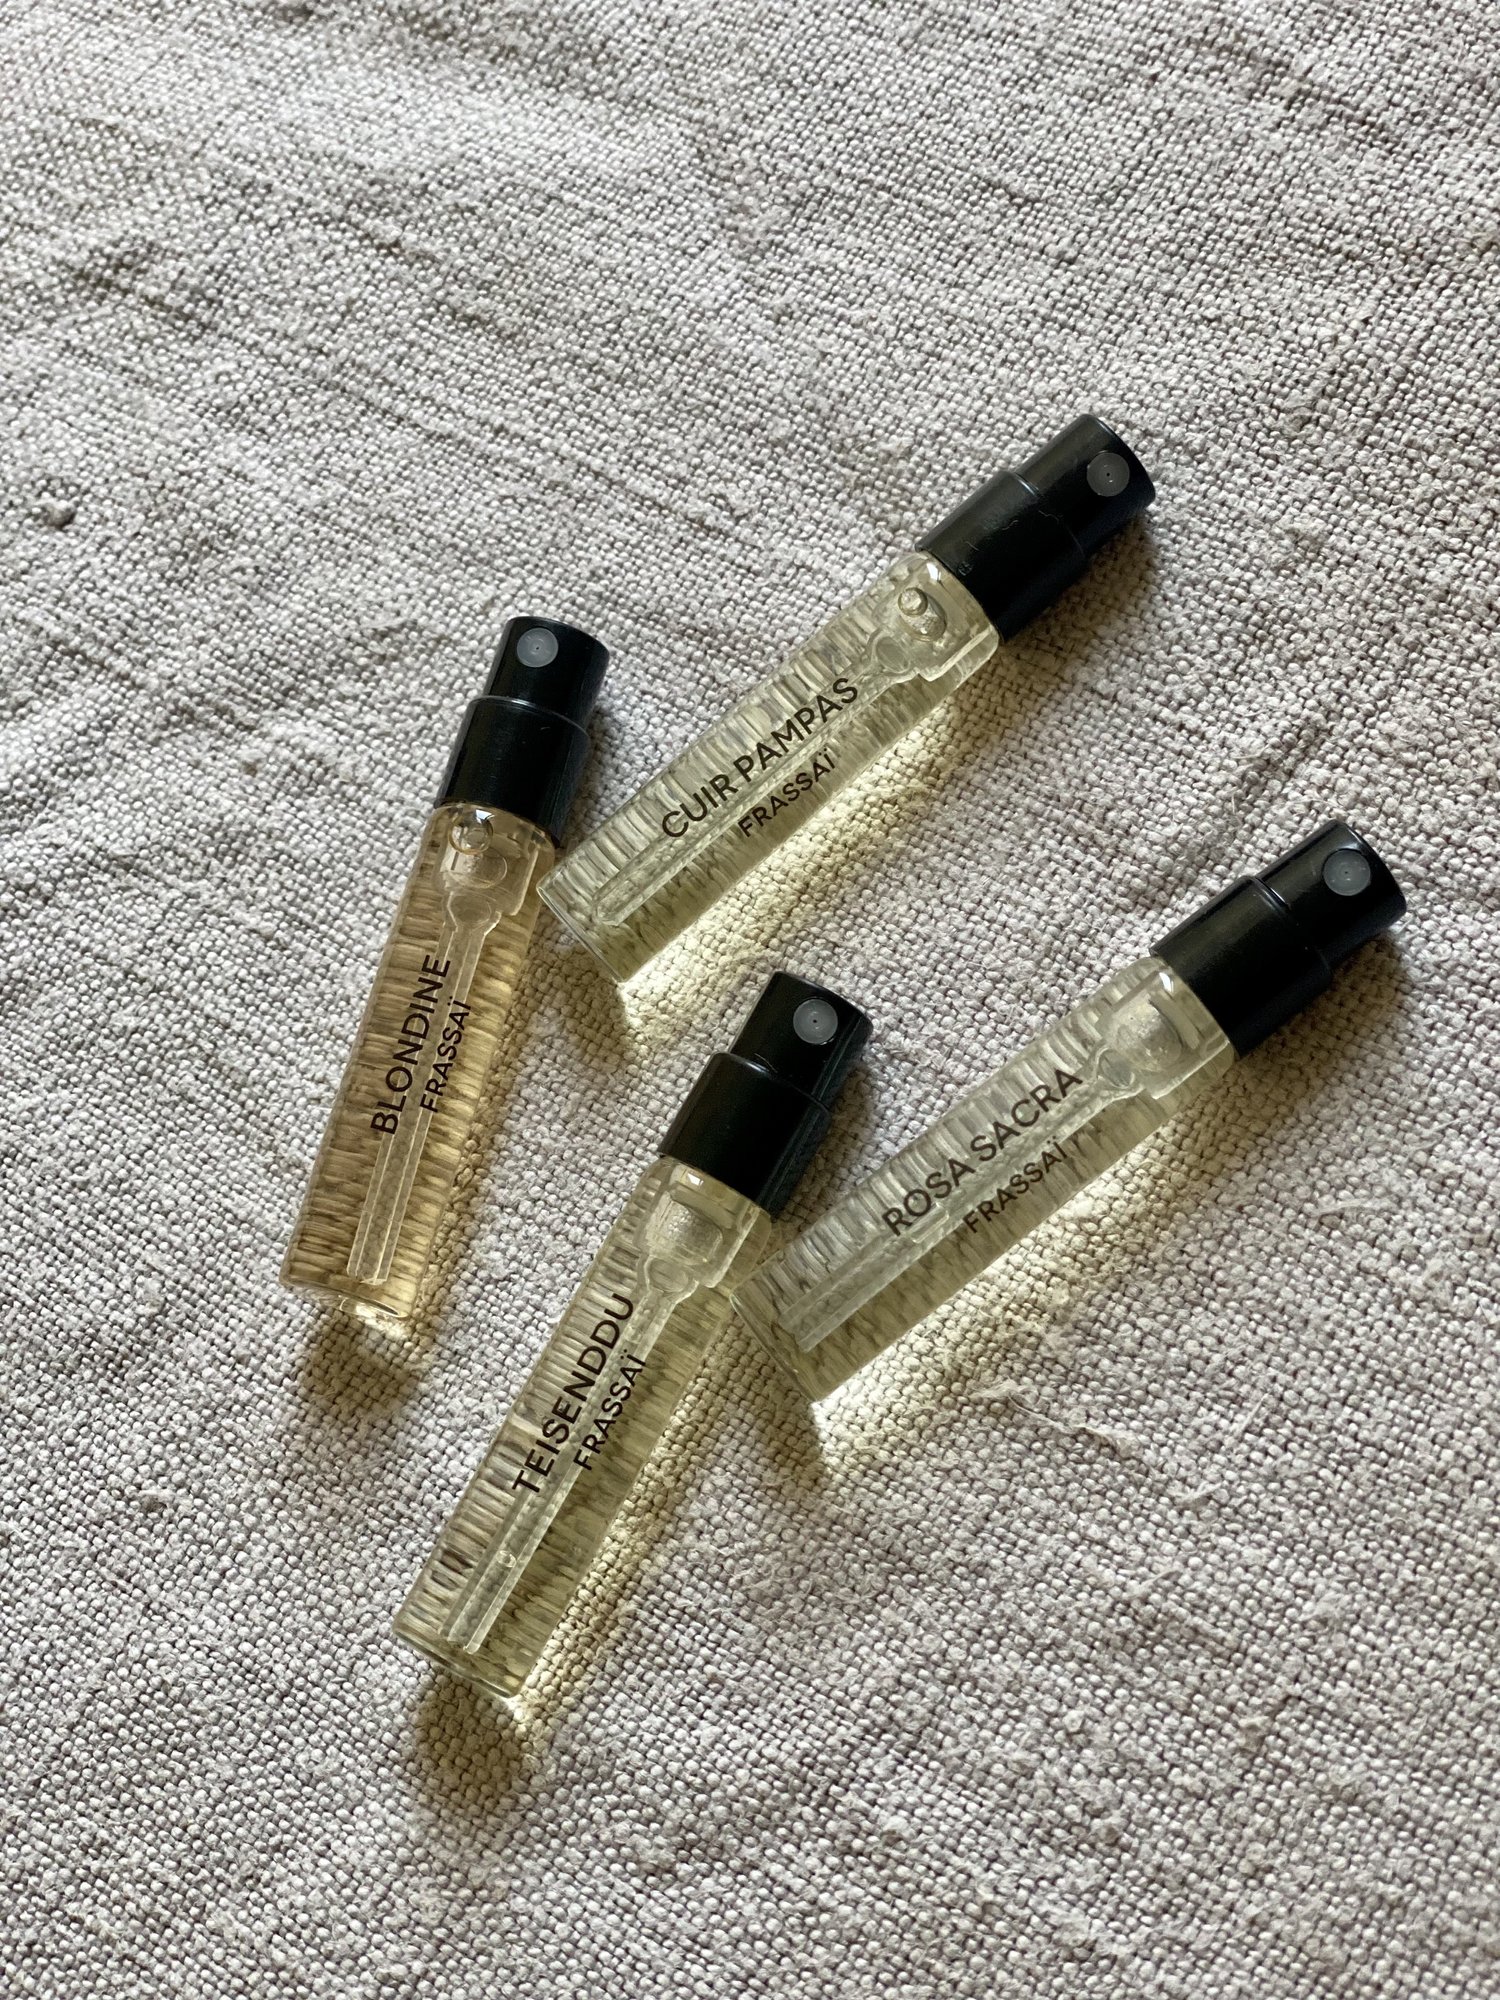 Mini Perfume Discovery Set Frassai slow perfume — Frassaï